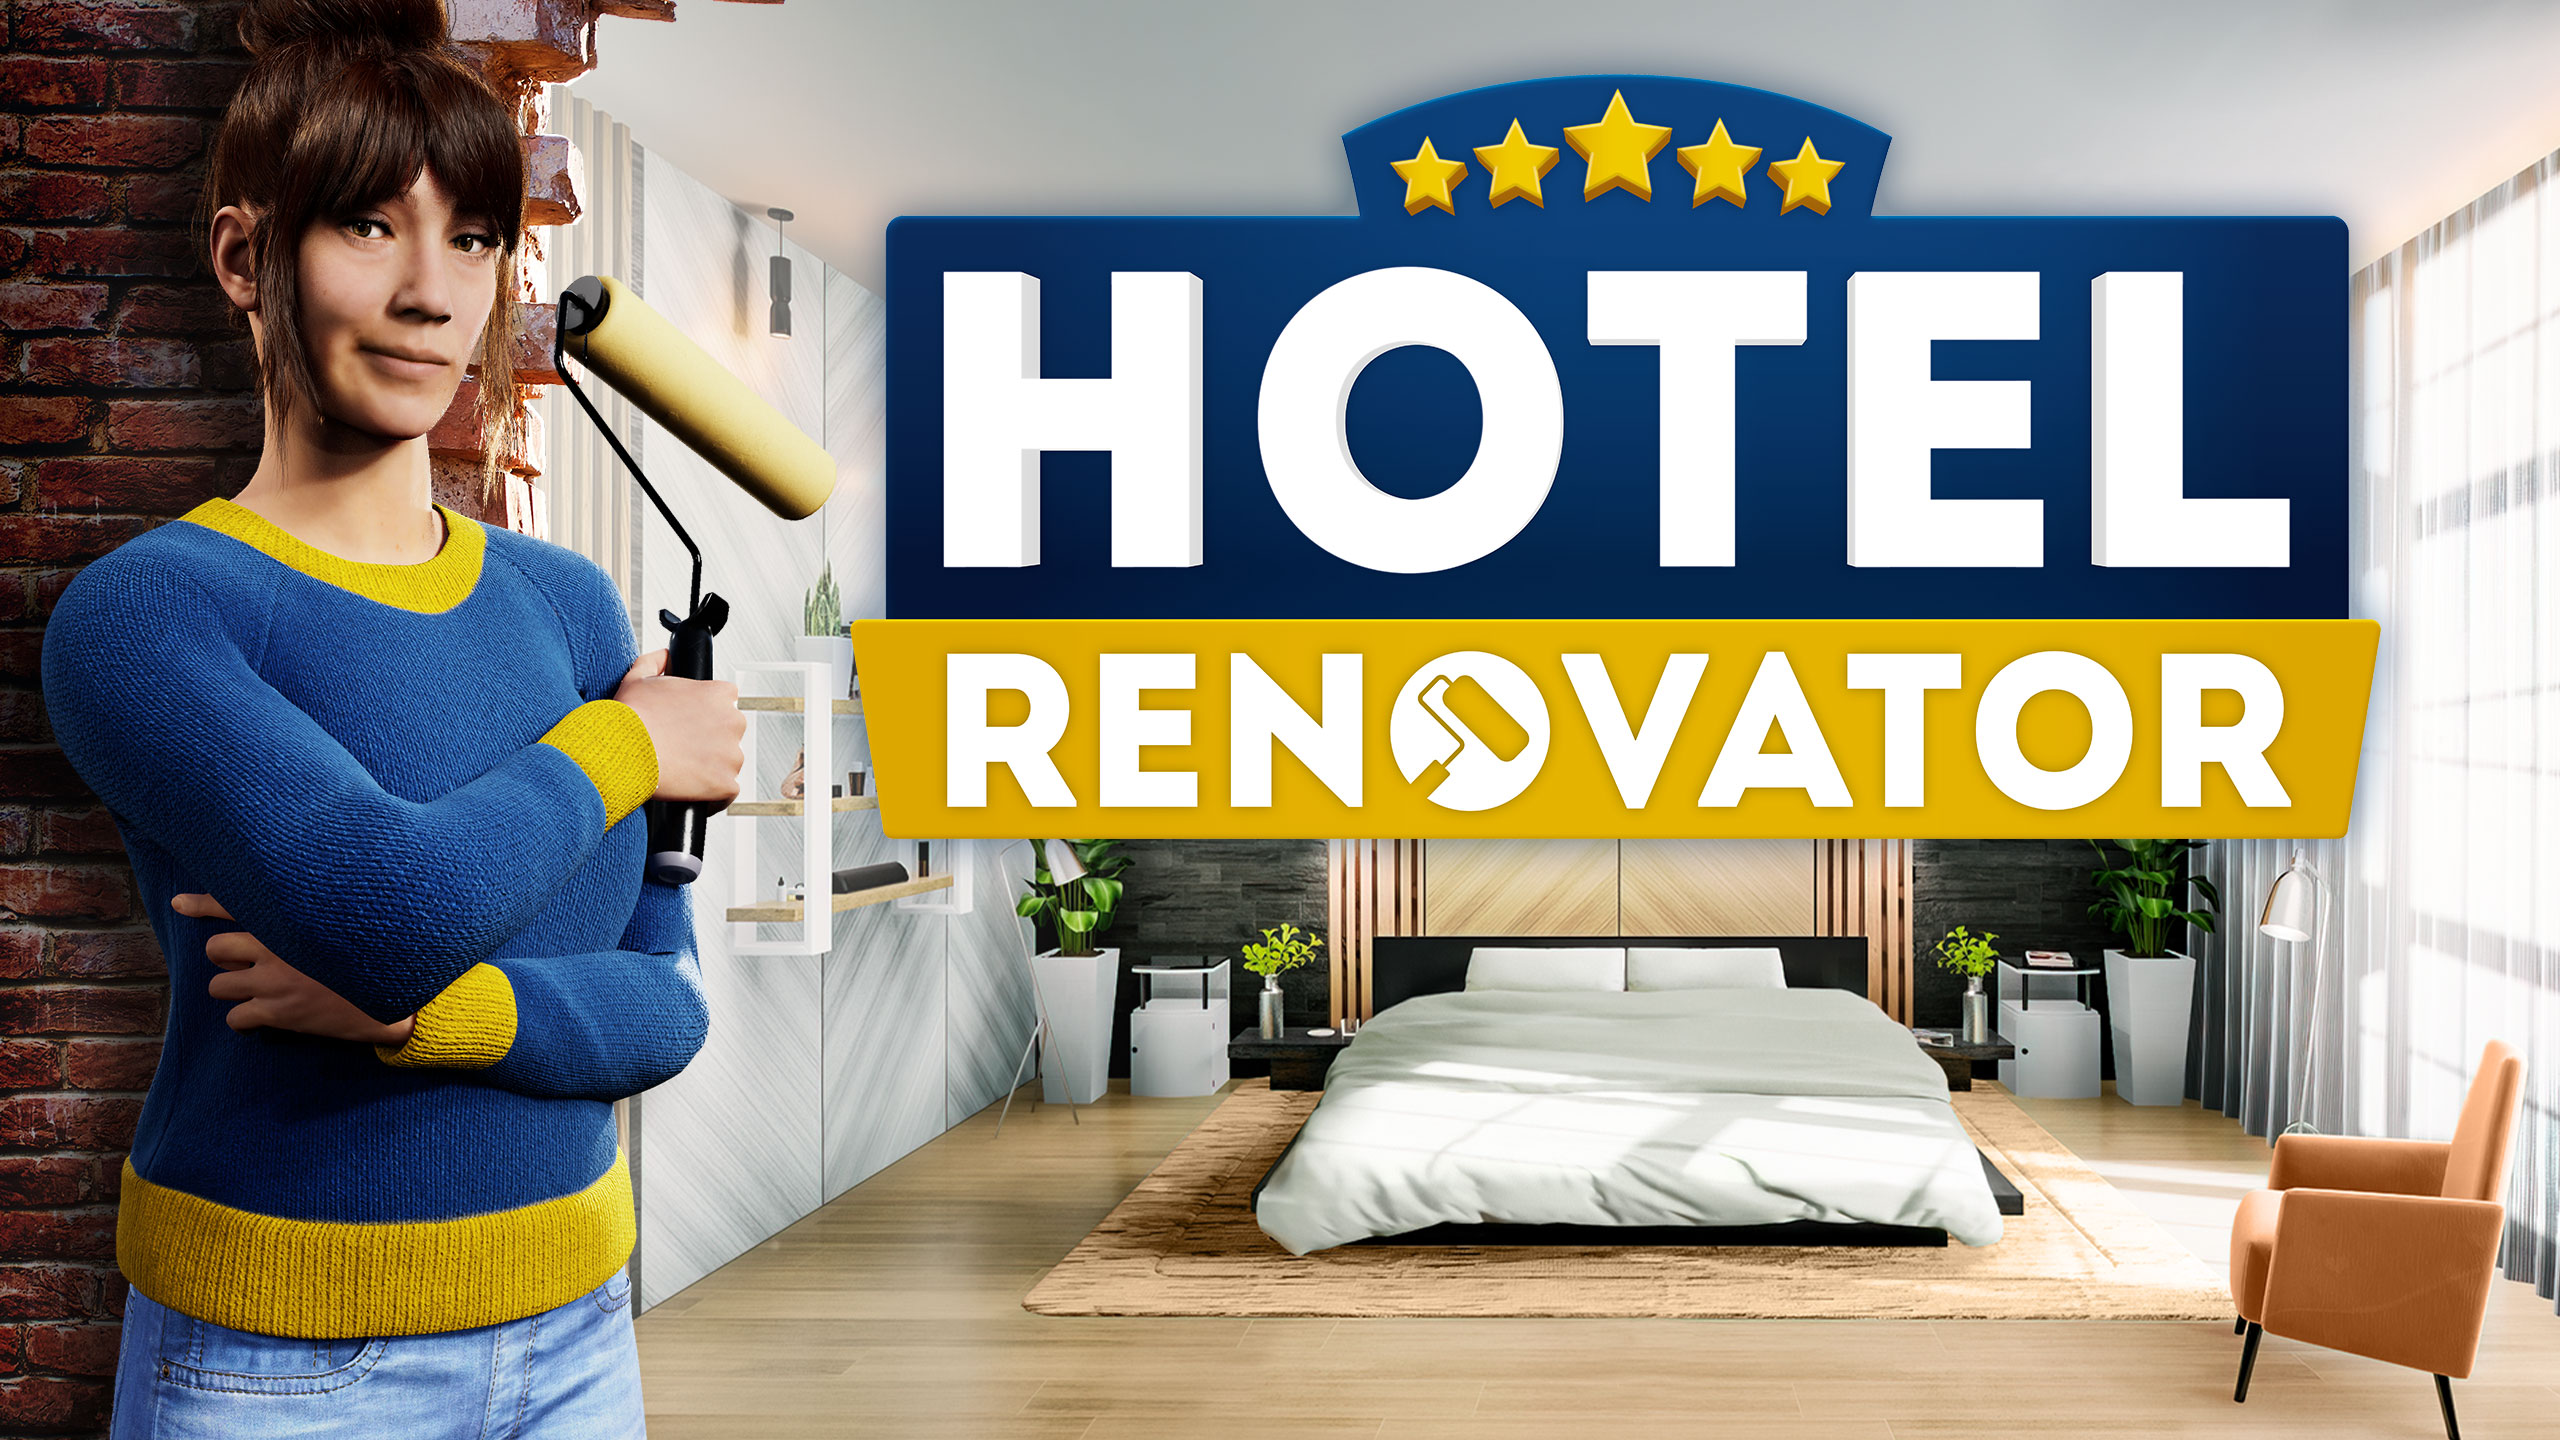 Hotel Renovator Five Star Edition Steam CD Key